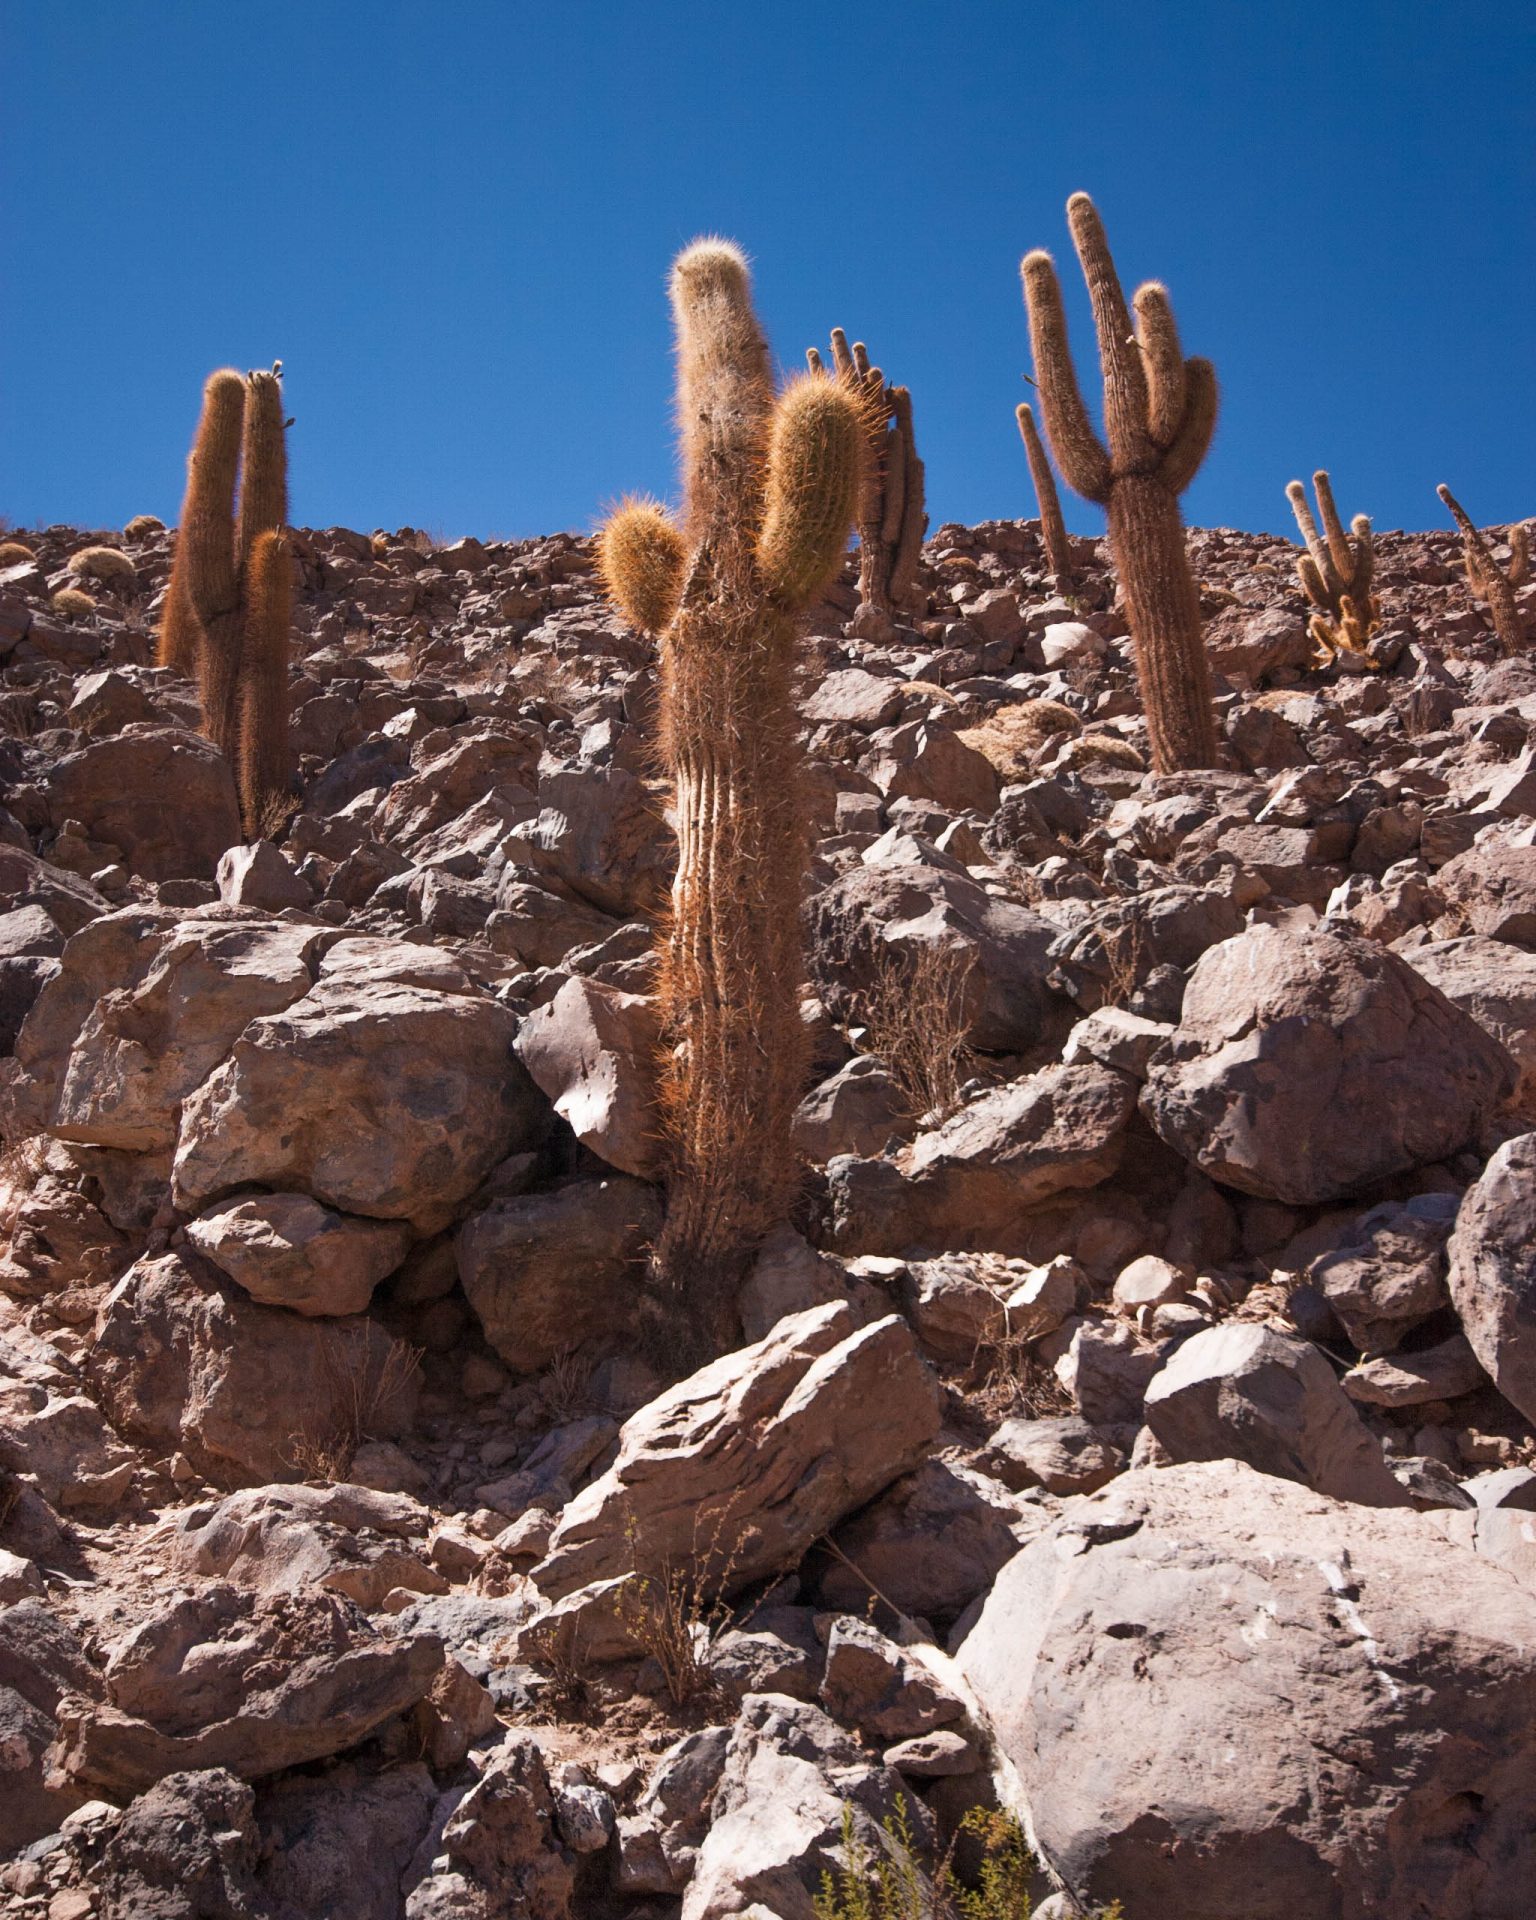 Cactus in the rocks.